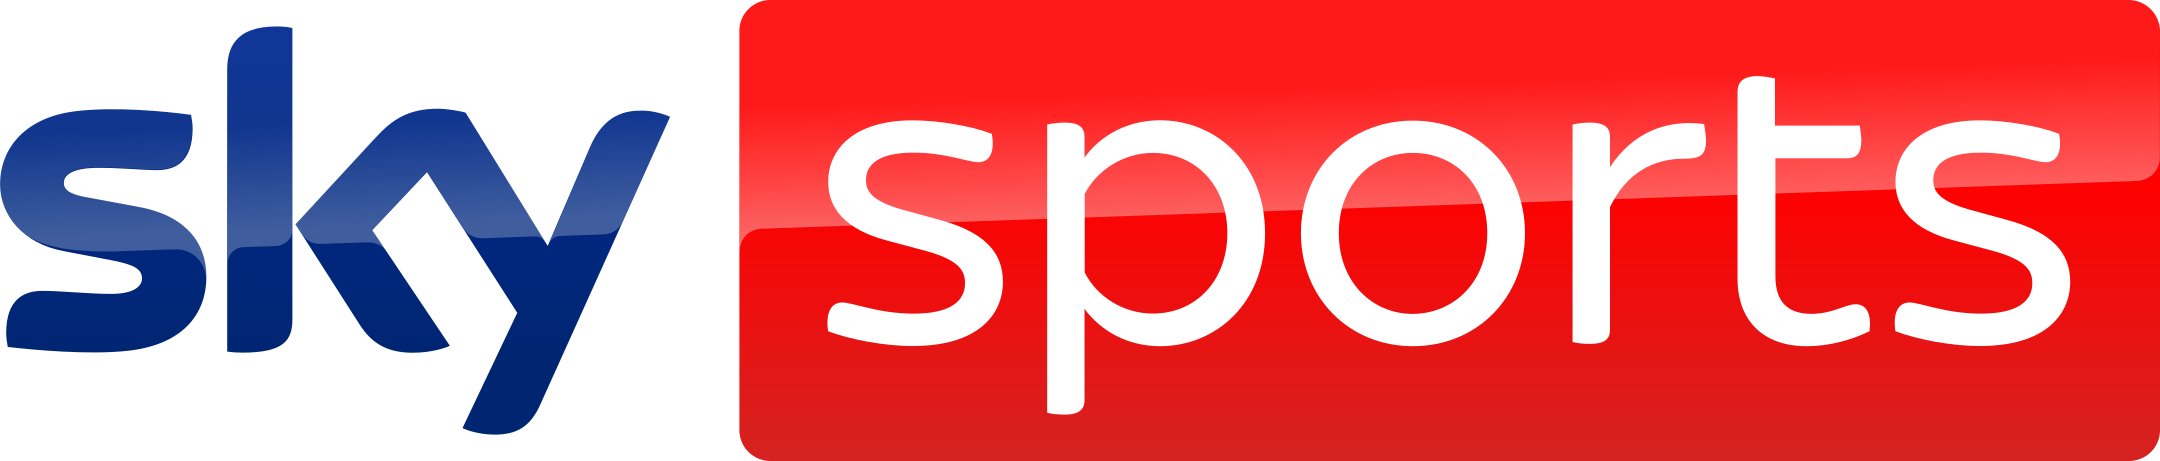 sky sports logo 1 1 - Sky Sports Logo